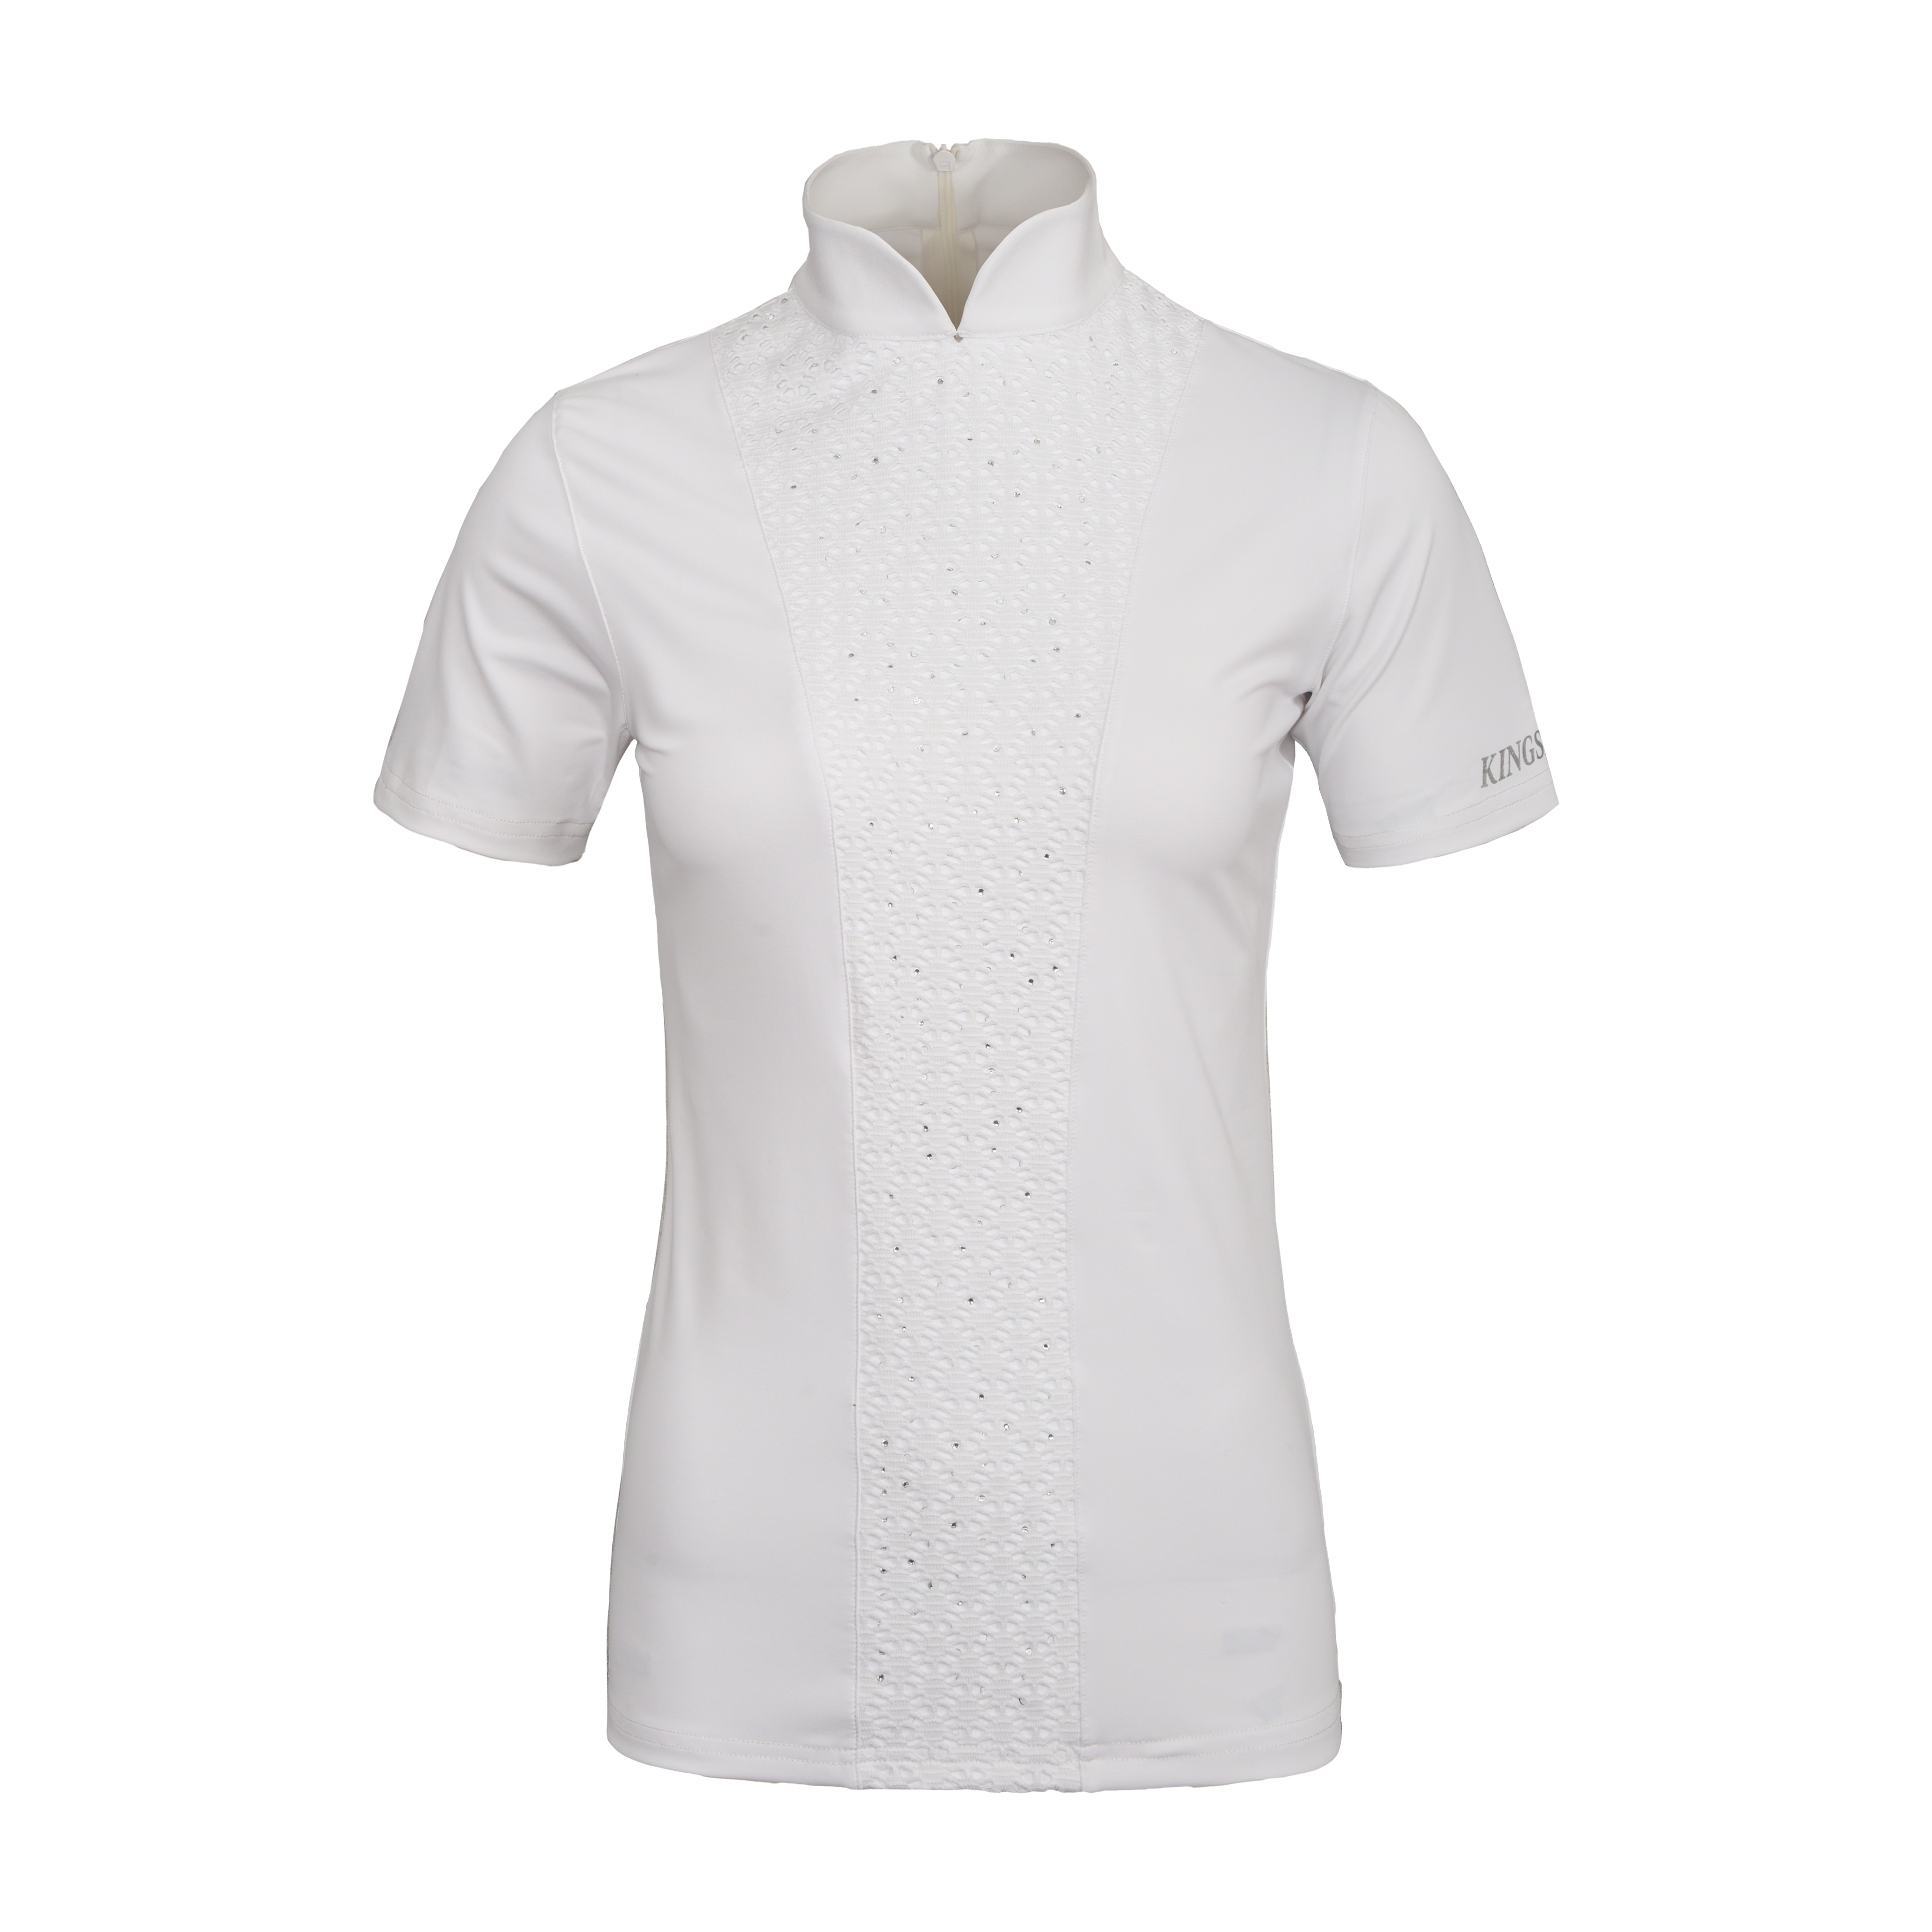 Kingsland KLbridget Damen-Turniershirt, White